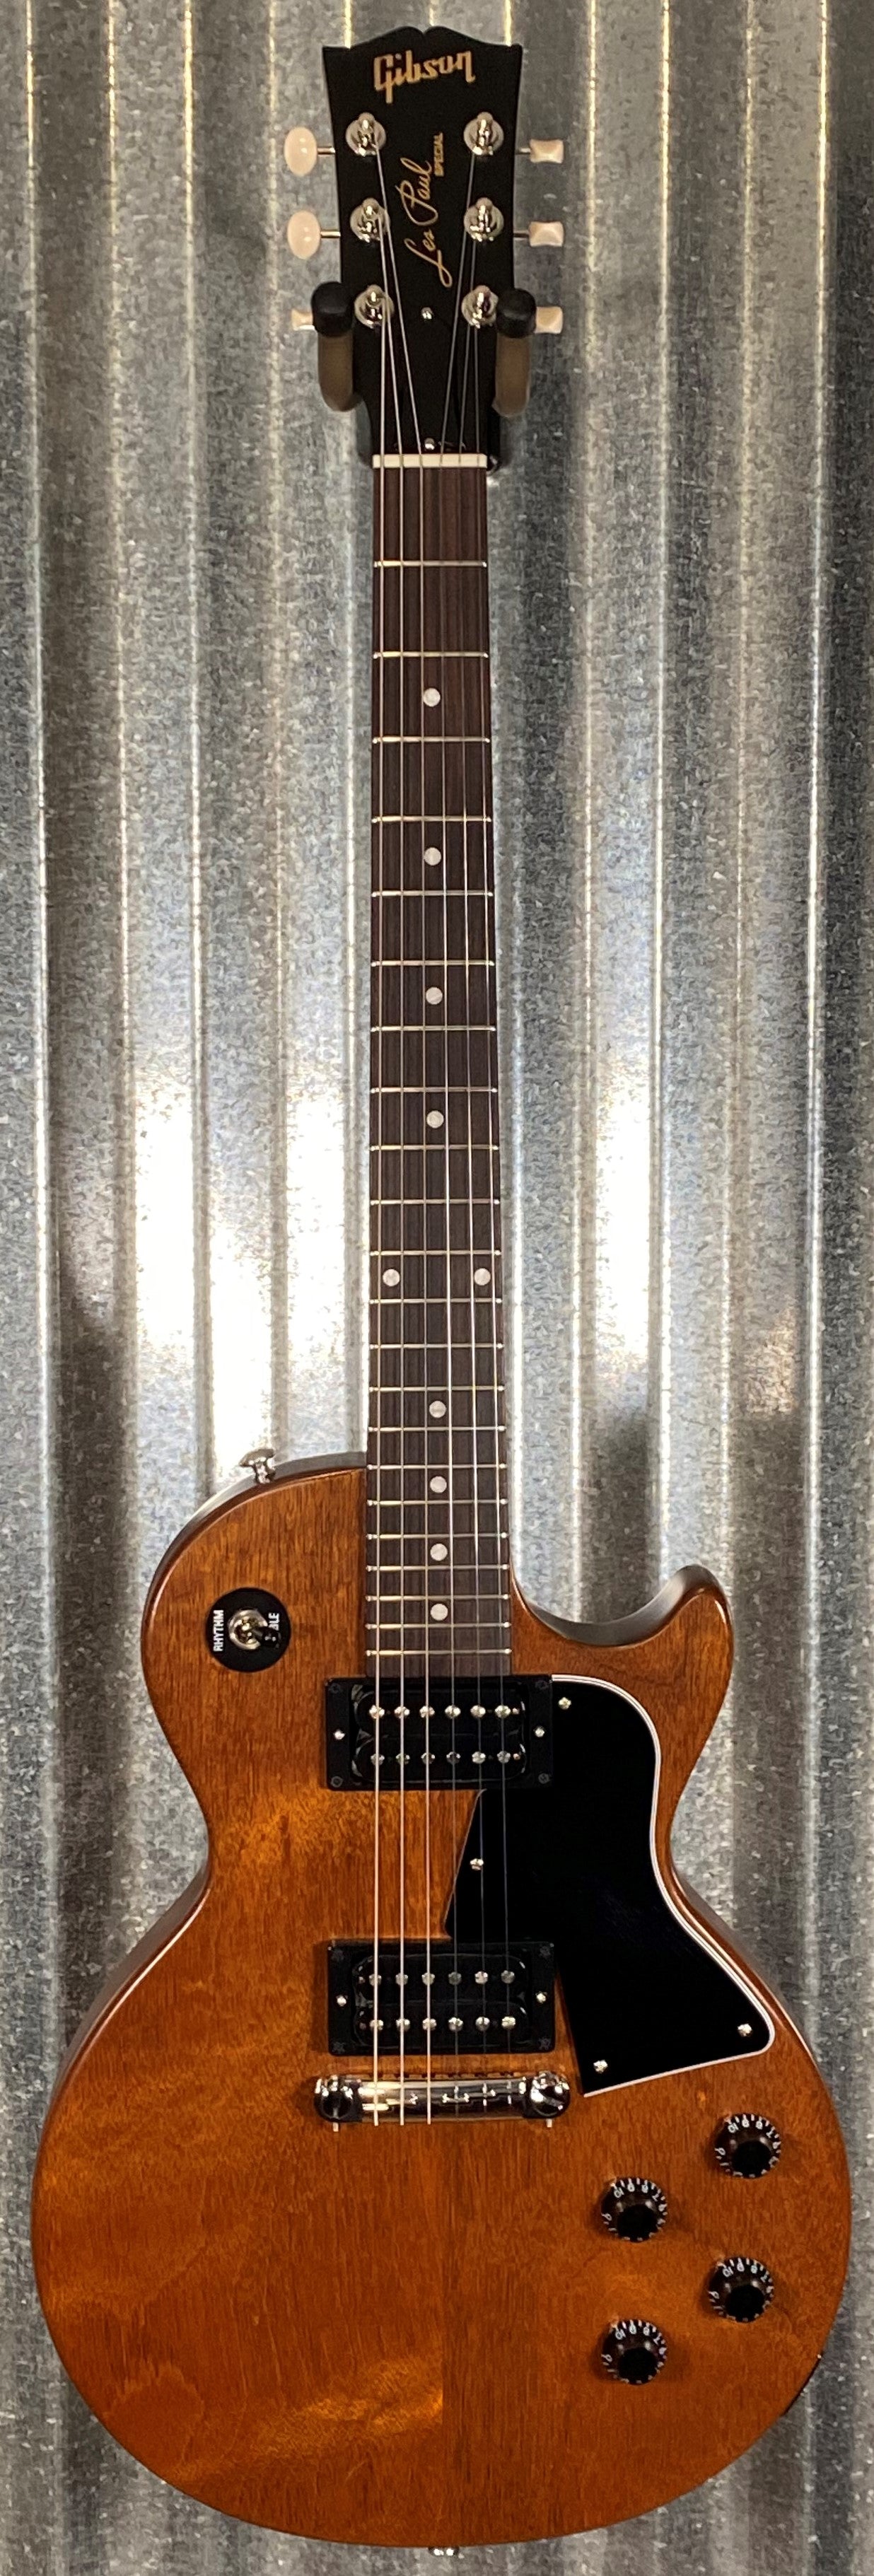 Gibson USA Les Paul Special Tribute Humbucker Natural Walnut Satin Guitar & Bag #0265 Used